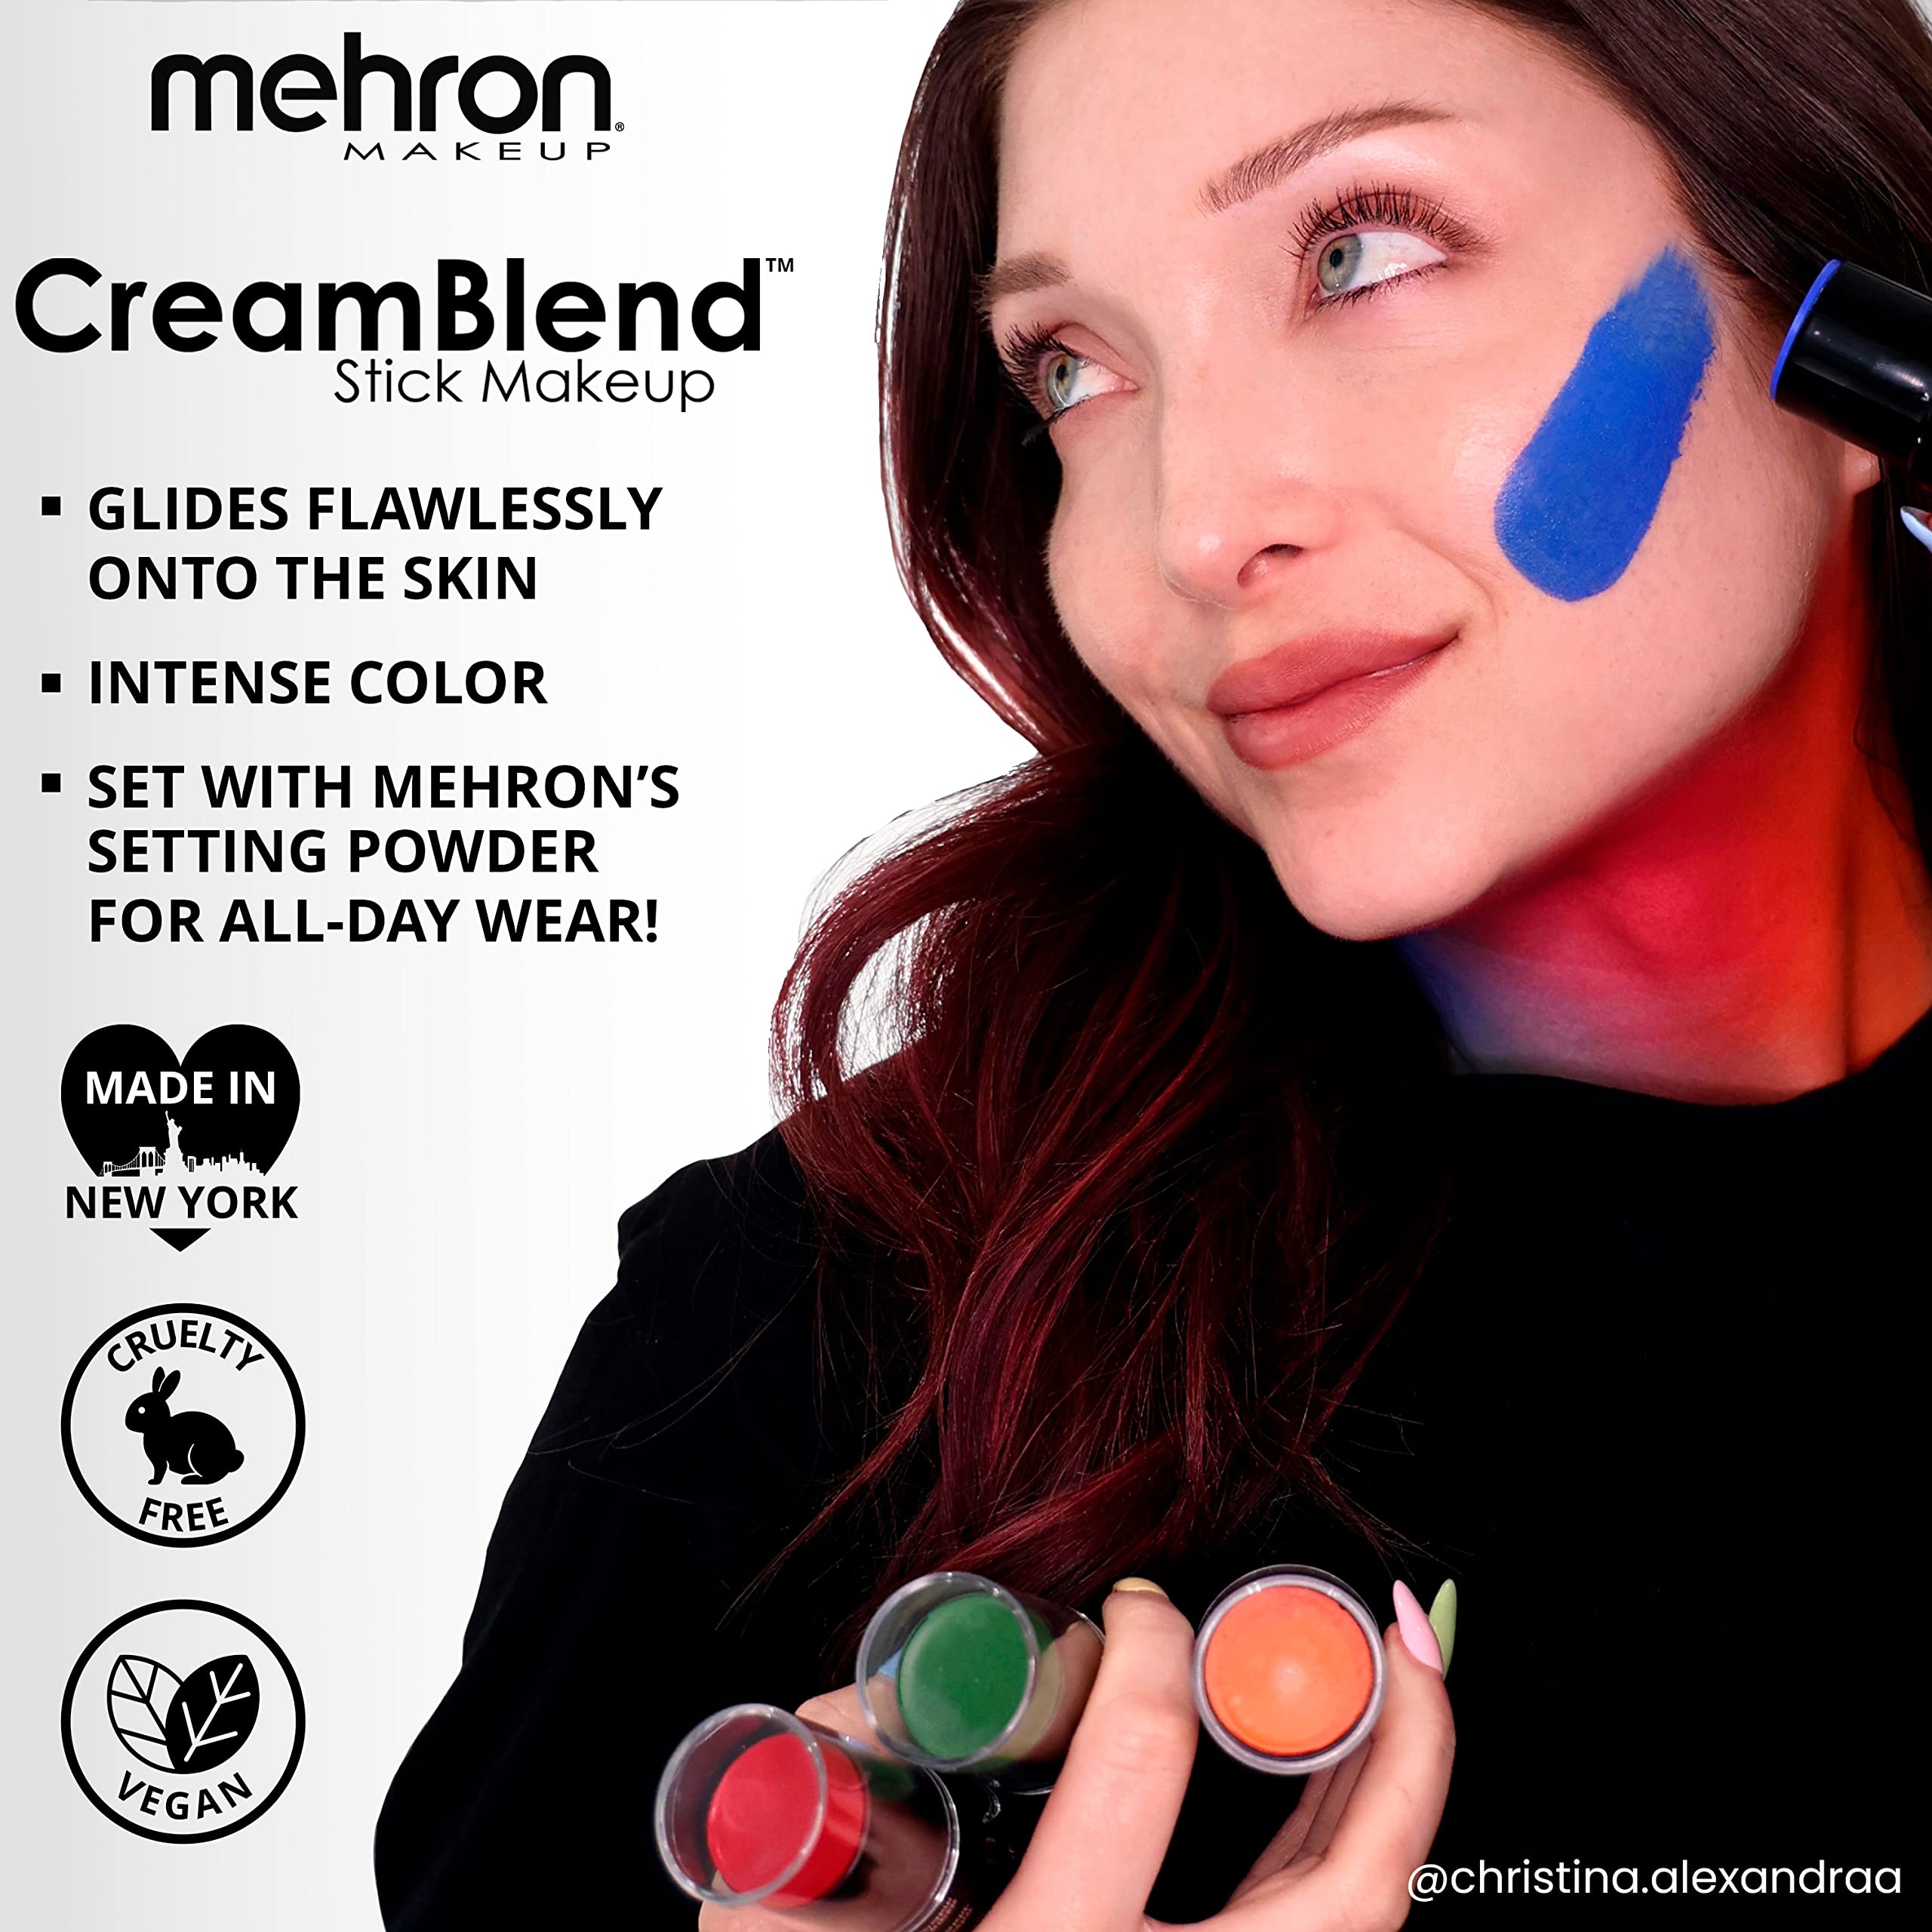 Mehron Makeup CreamBlend Stick - Body Paint (.75oz) (Pastel Pink)